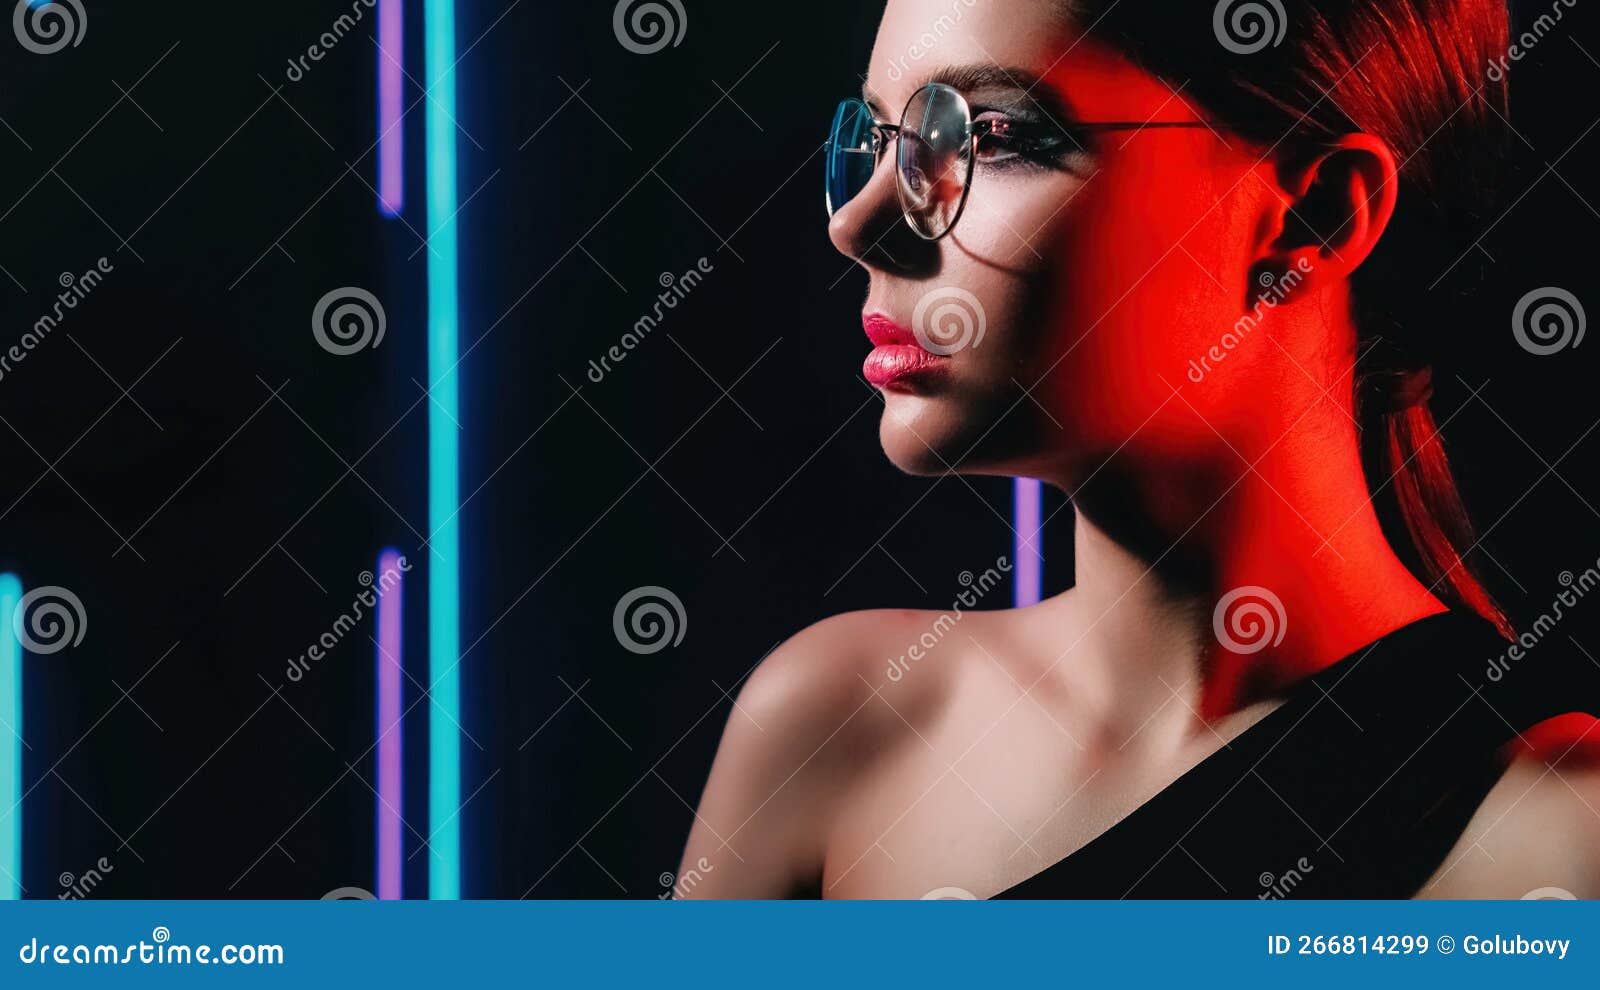 s look optic fashion retro eyewear red purple blue color neon light profile portrait teen girl model face glasses dark 266814299